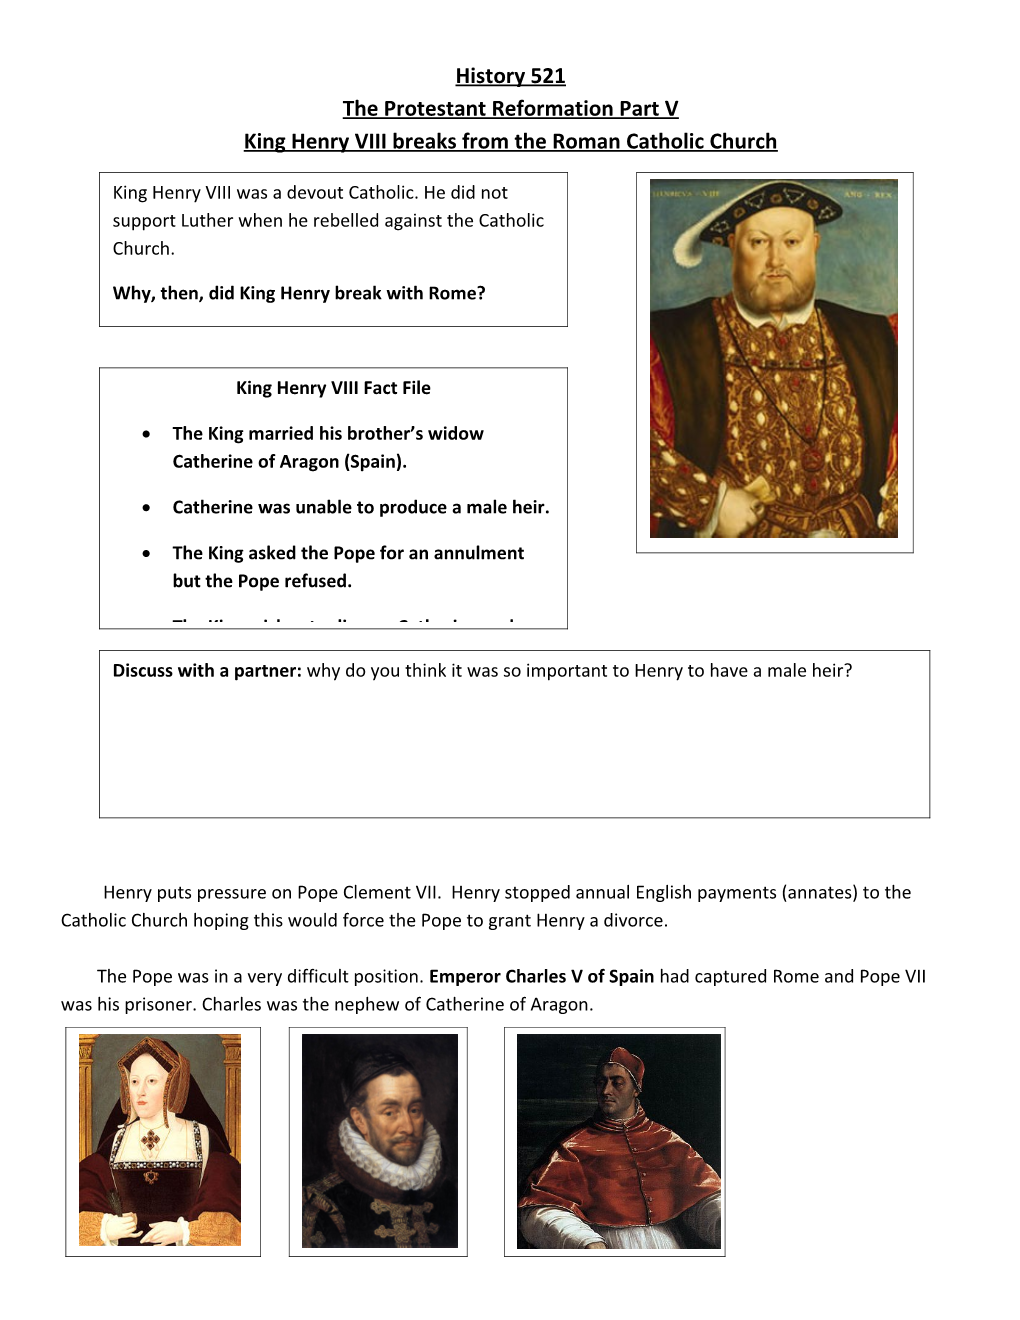 King Henry VIII Breaks from the Roman Catholic Church